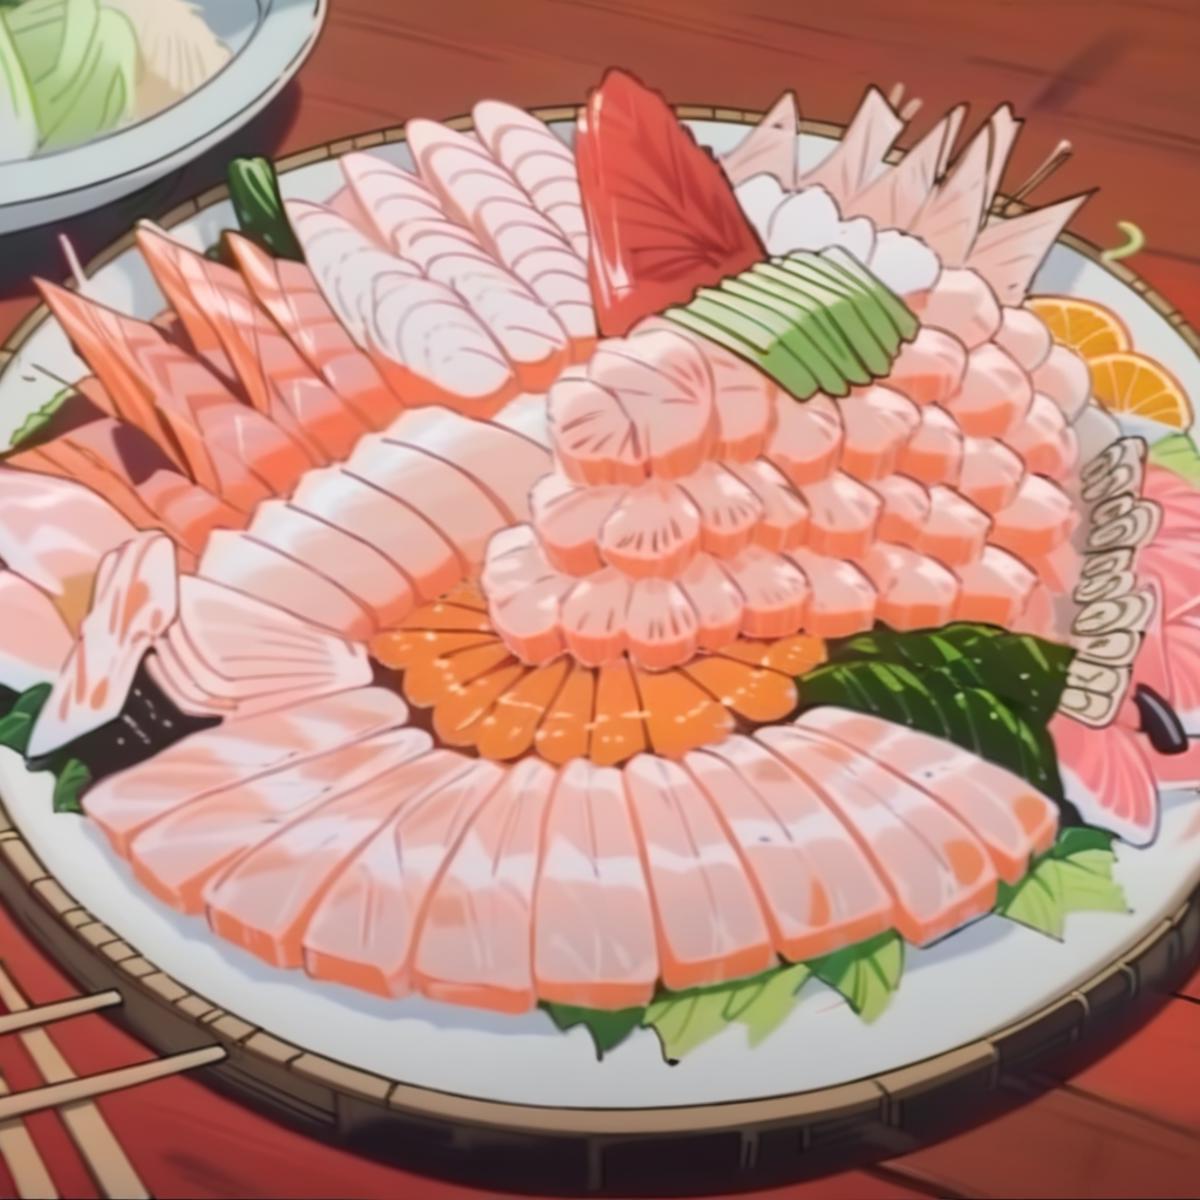 Chūka Ichiban Style food | SDXL image by allpleoleo439